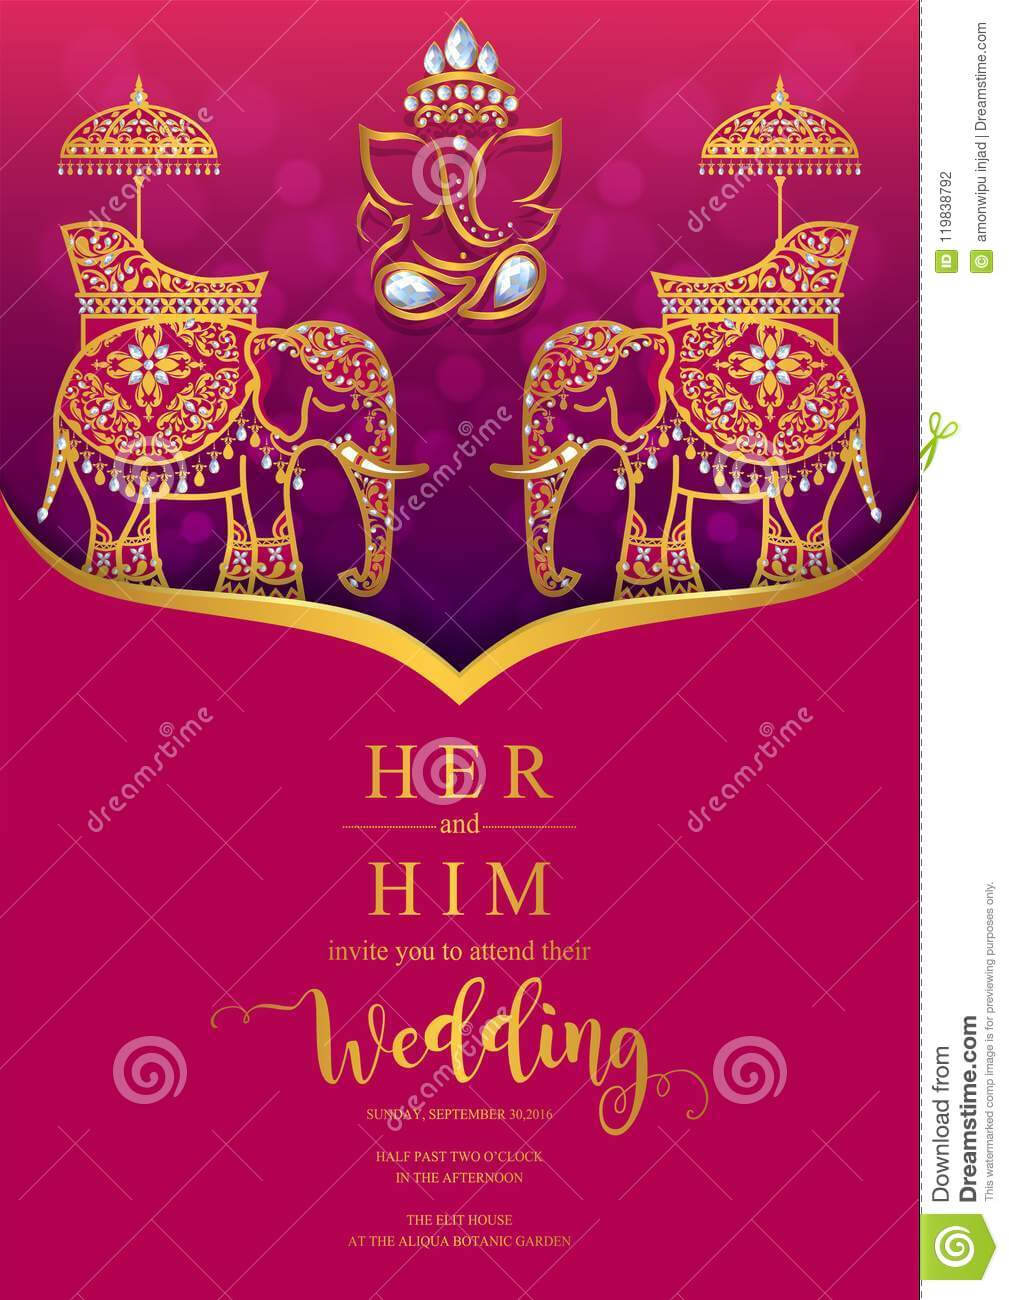 Wedding Invitation Card Templates . Stock Vector With Regard To Indian Wedding Cards Design Templates